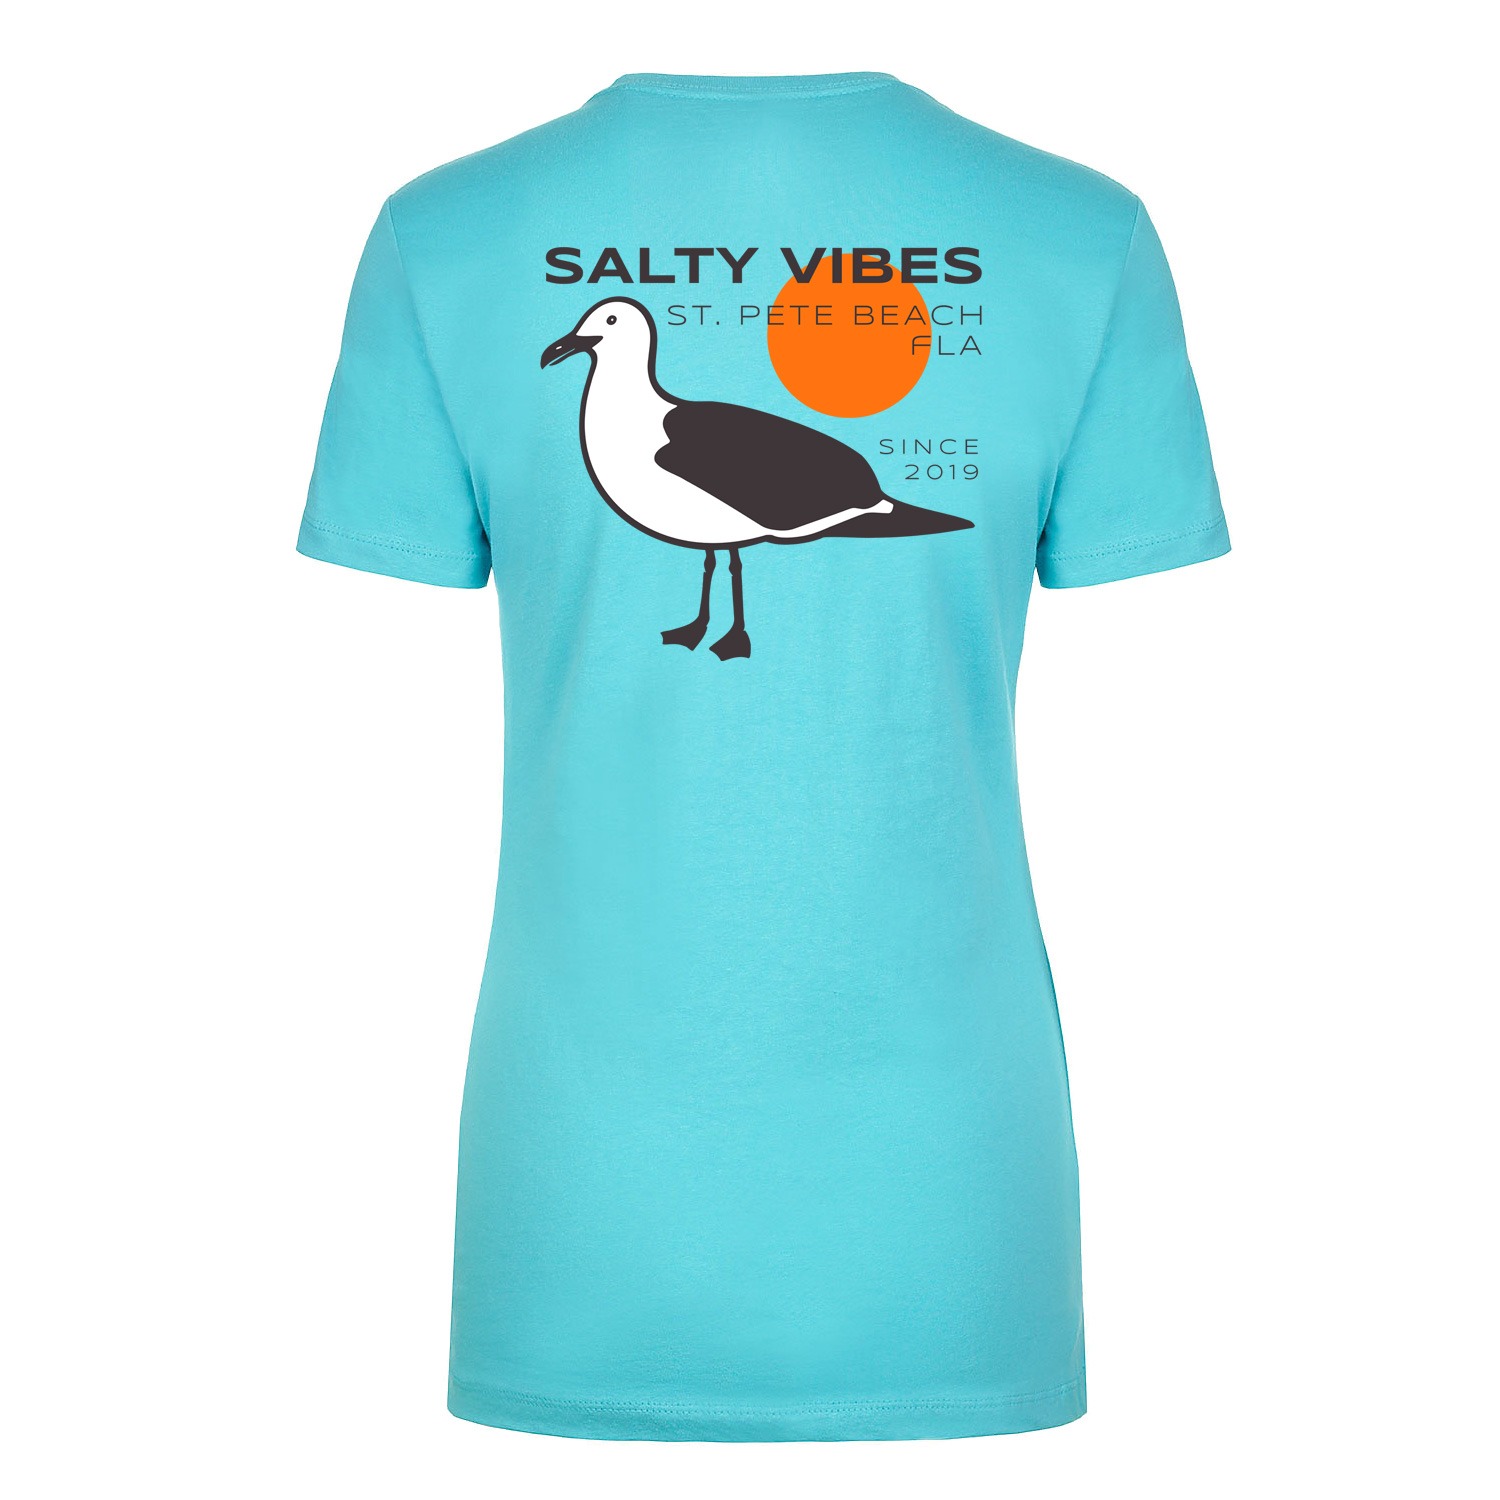 Salty Vibes Sea Gull Women's Fitted T-Shirt - Tahiti Blue, 2XL